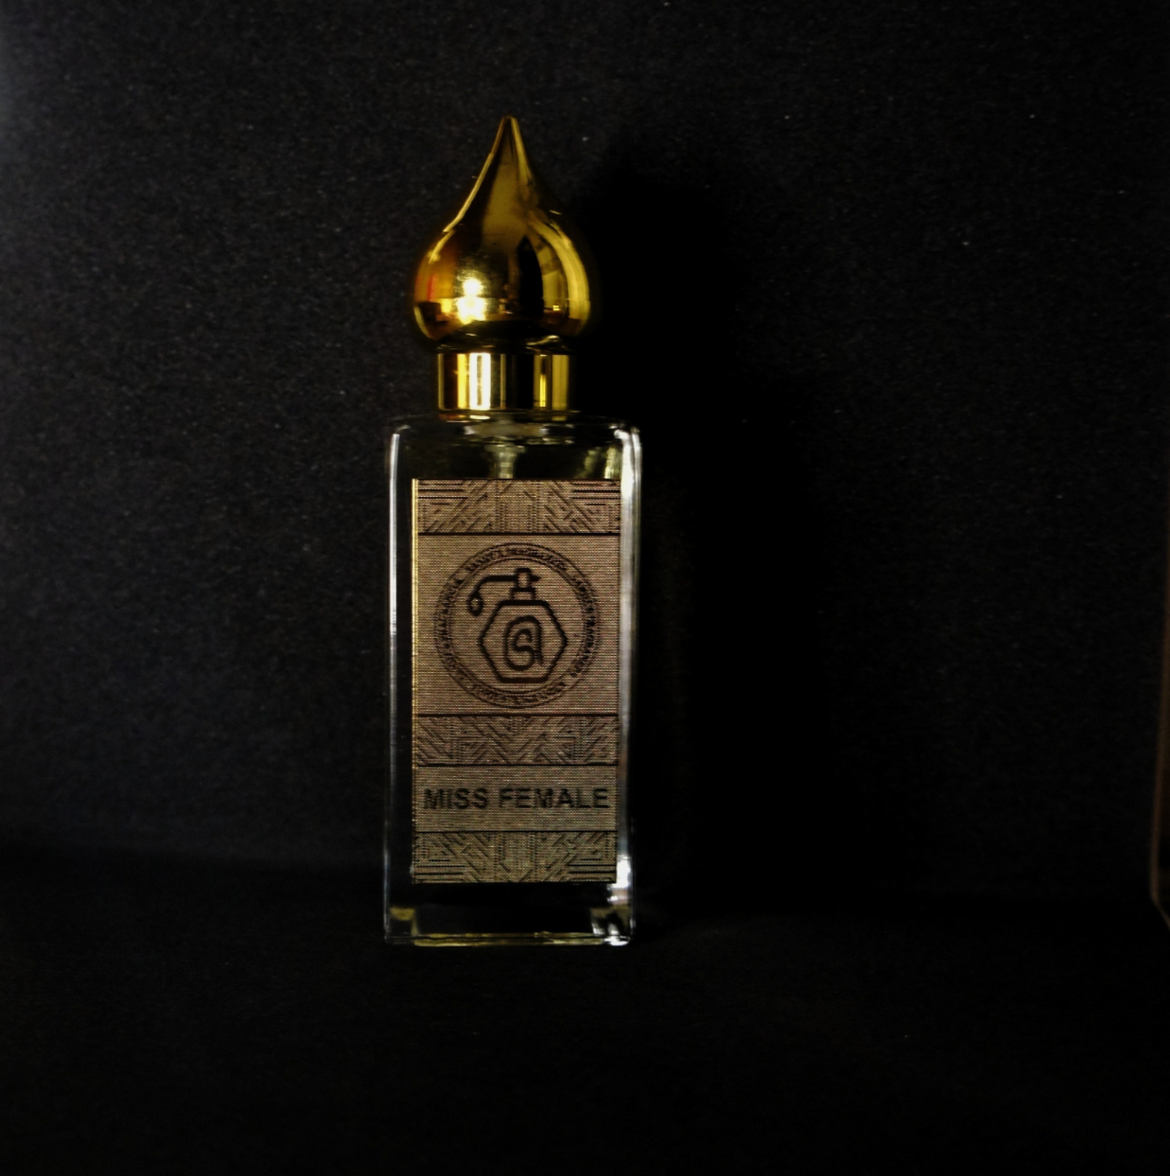 Miss Female Perfume by Sandy’s fragrance